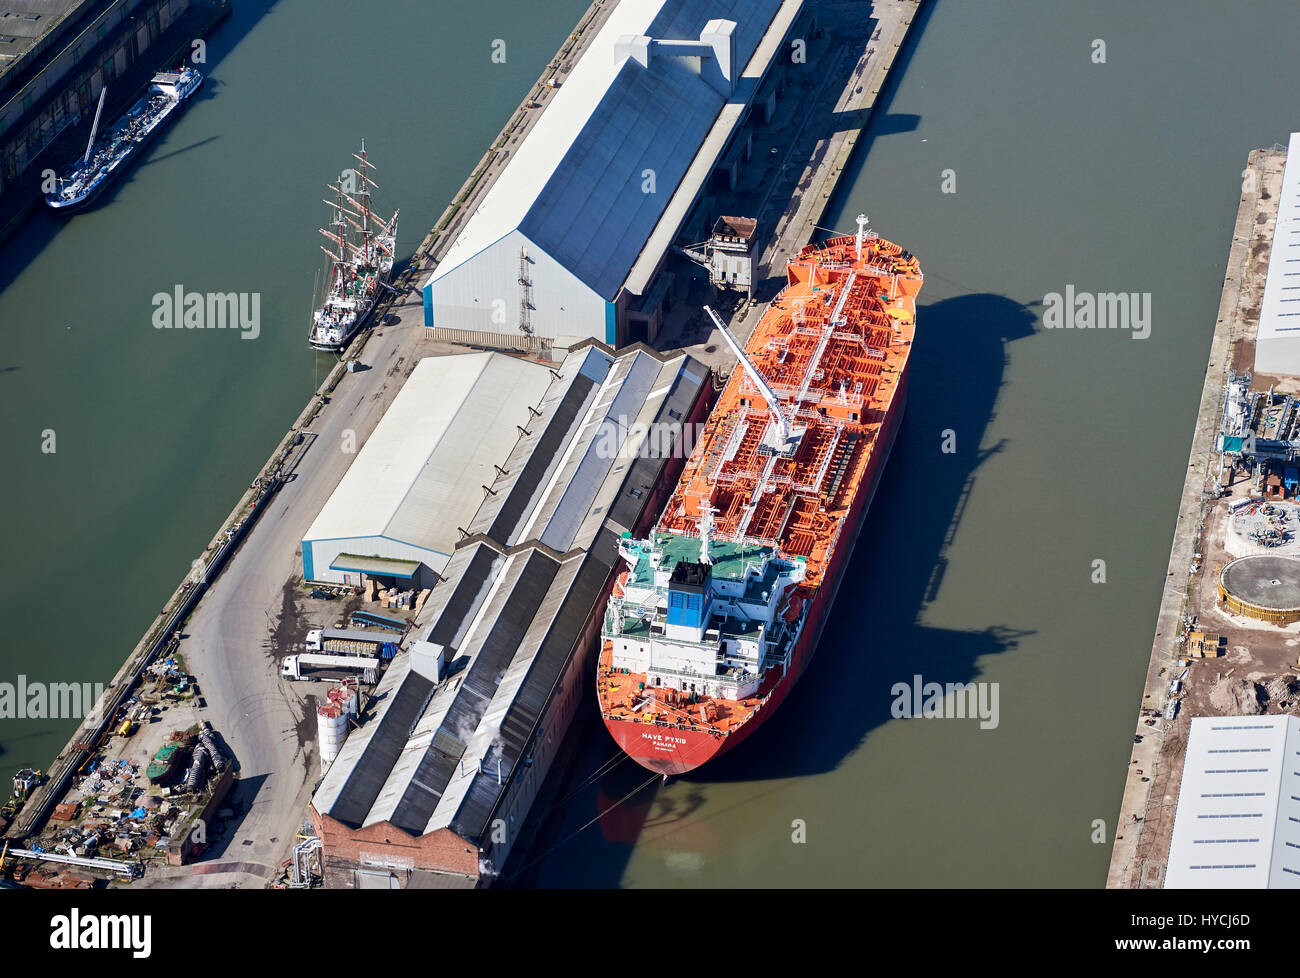 Seaforth Docks, Liverpool, Merseyside, North West England, UK Stock Photo